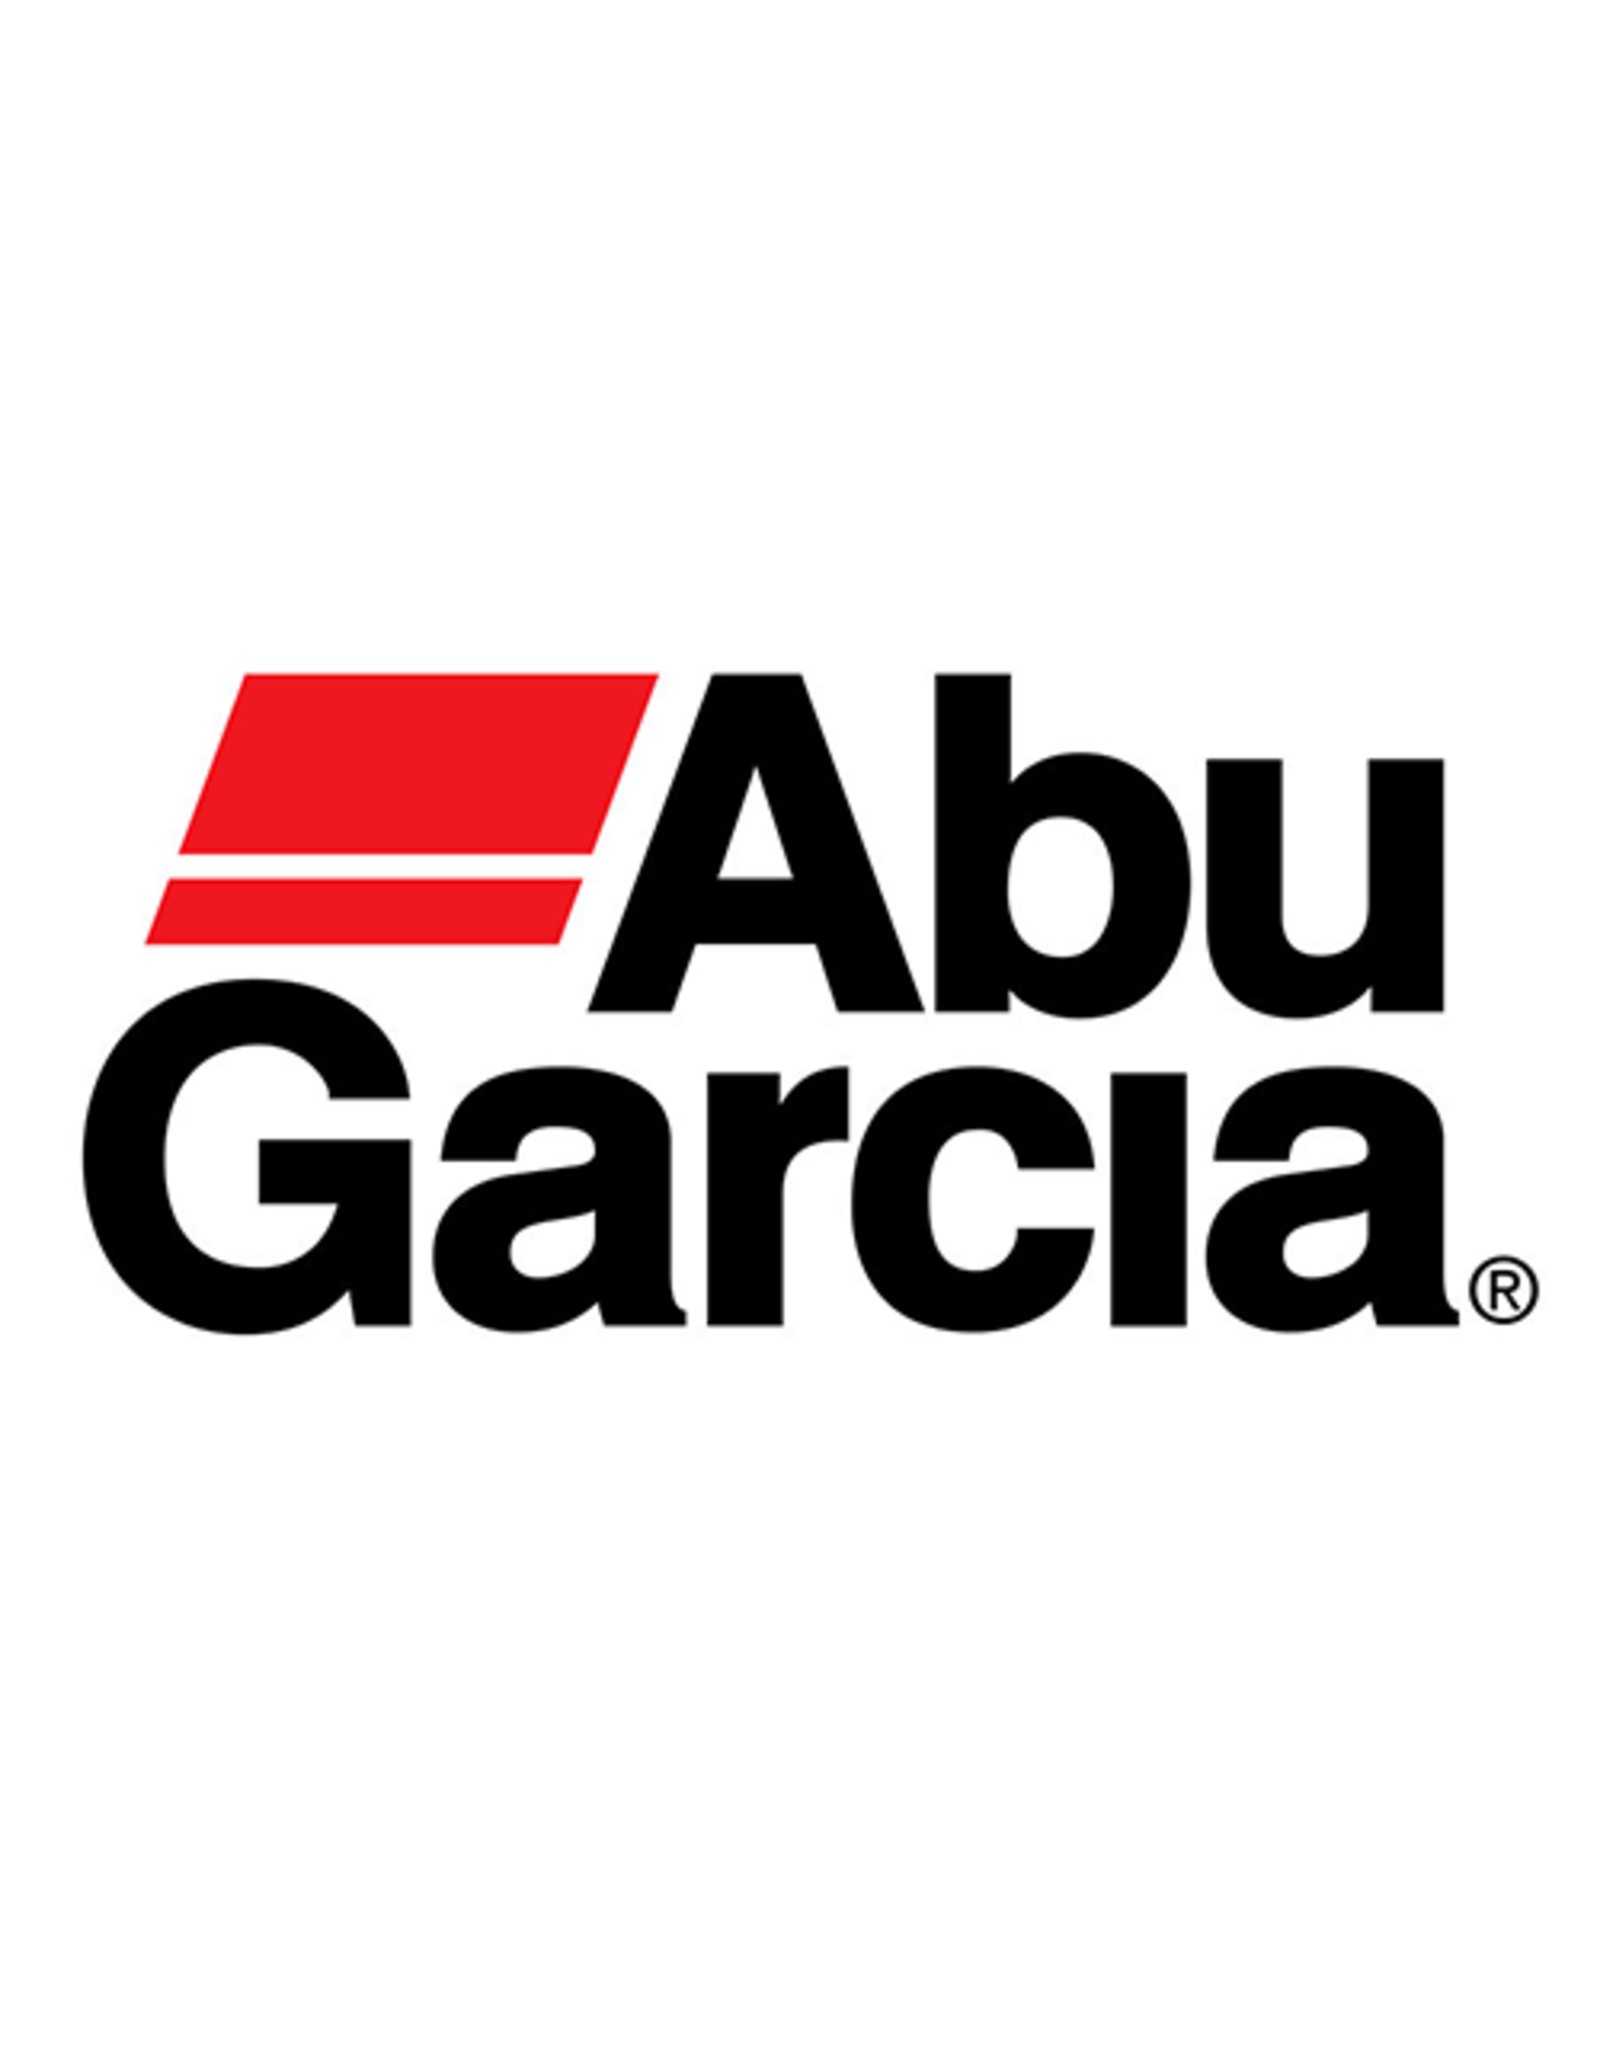 Abu Garcia 13008  CARRIAGE SCREW GUARD